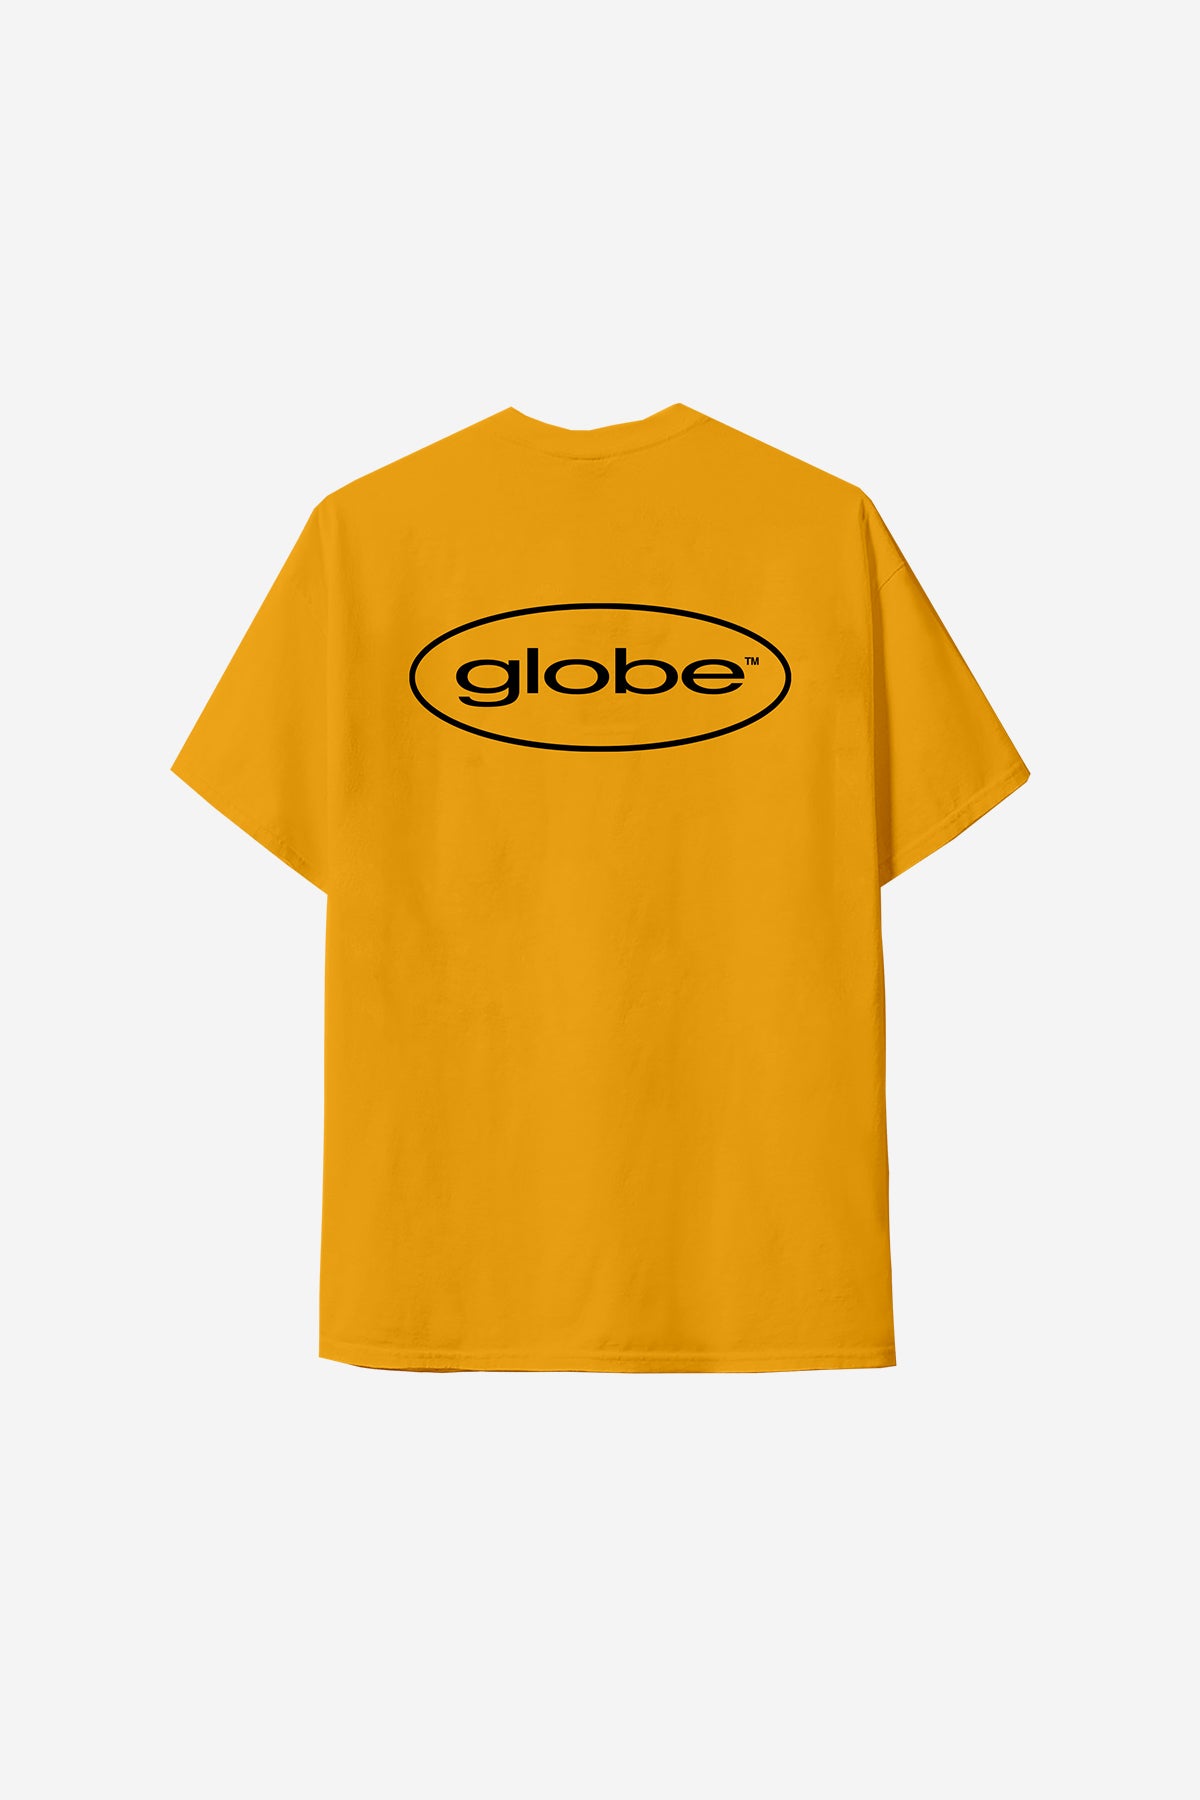 Globe - Ovaal T-shirt - Citrus